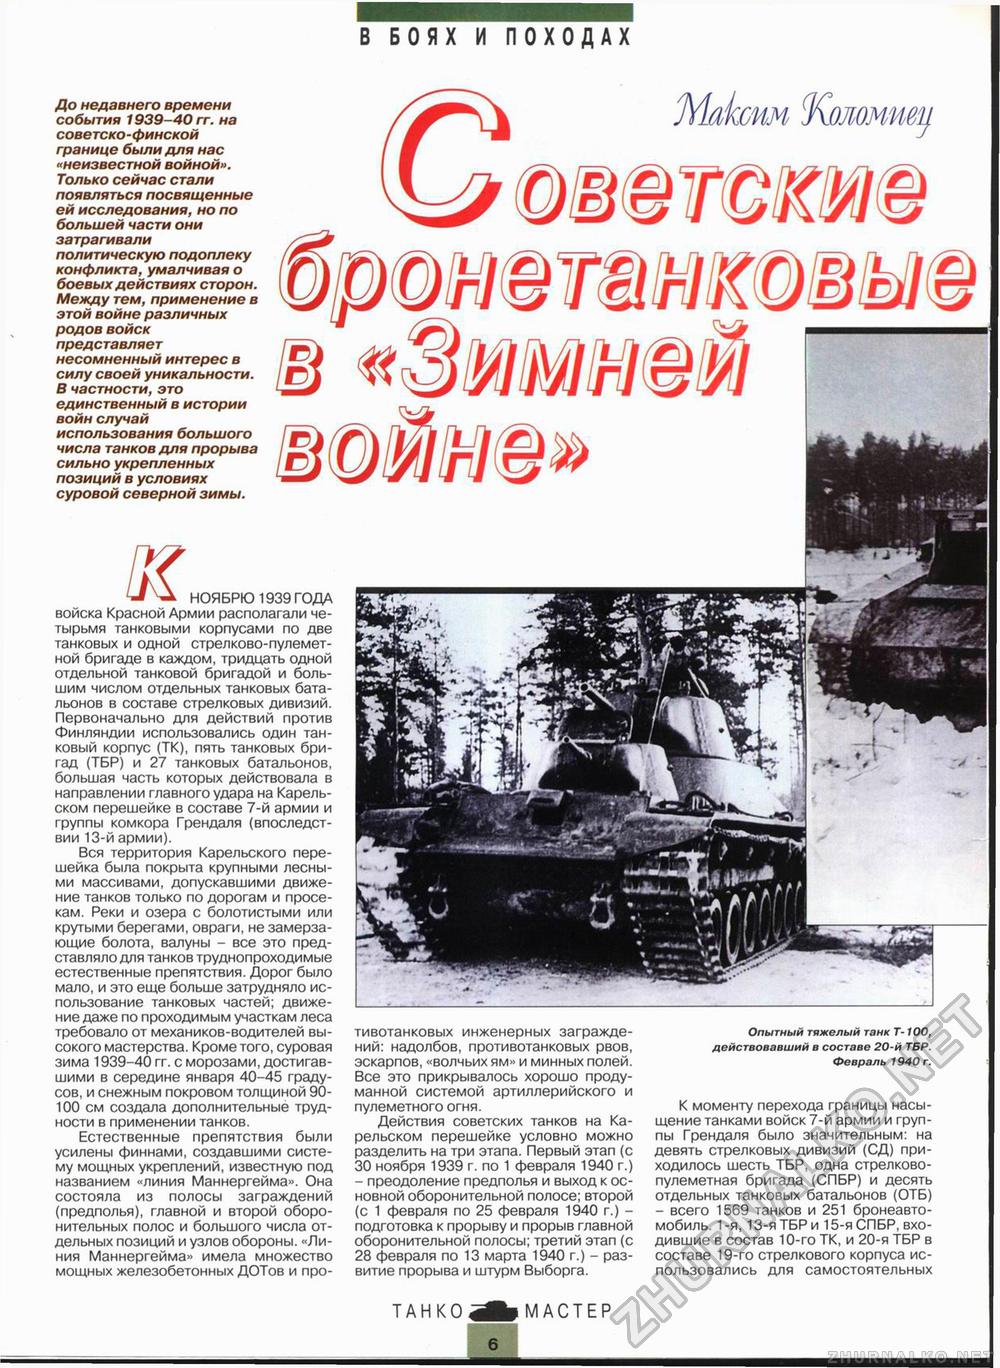 Танкомастер 1997-02, страница 8